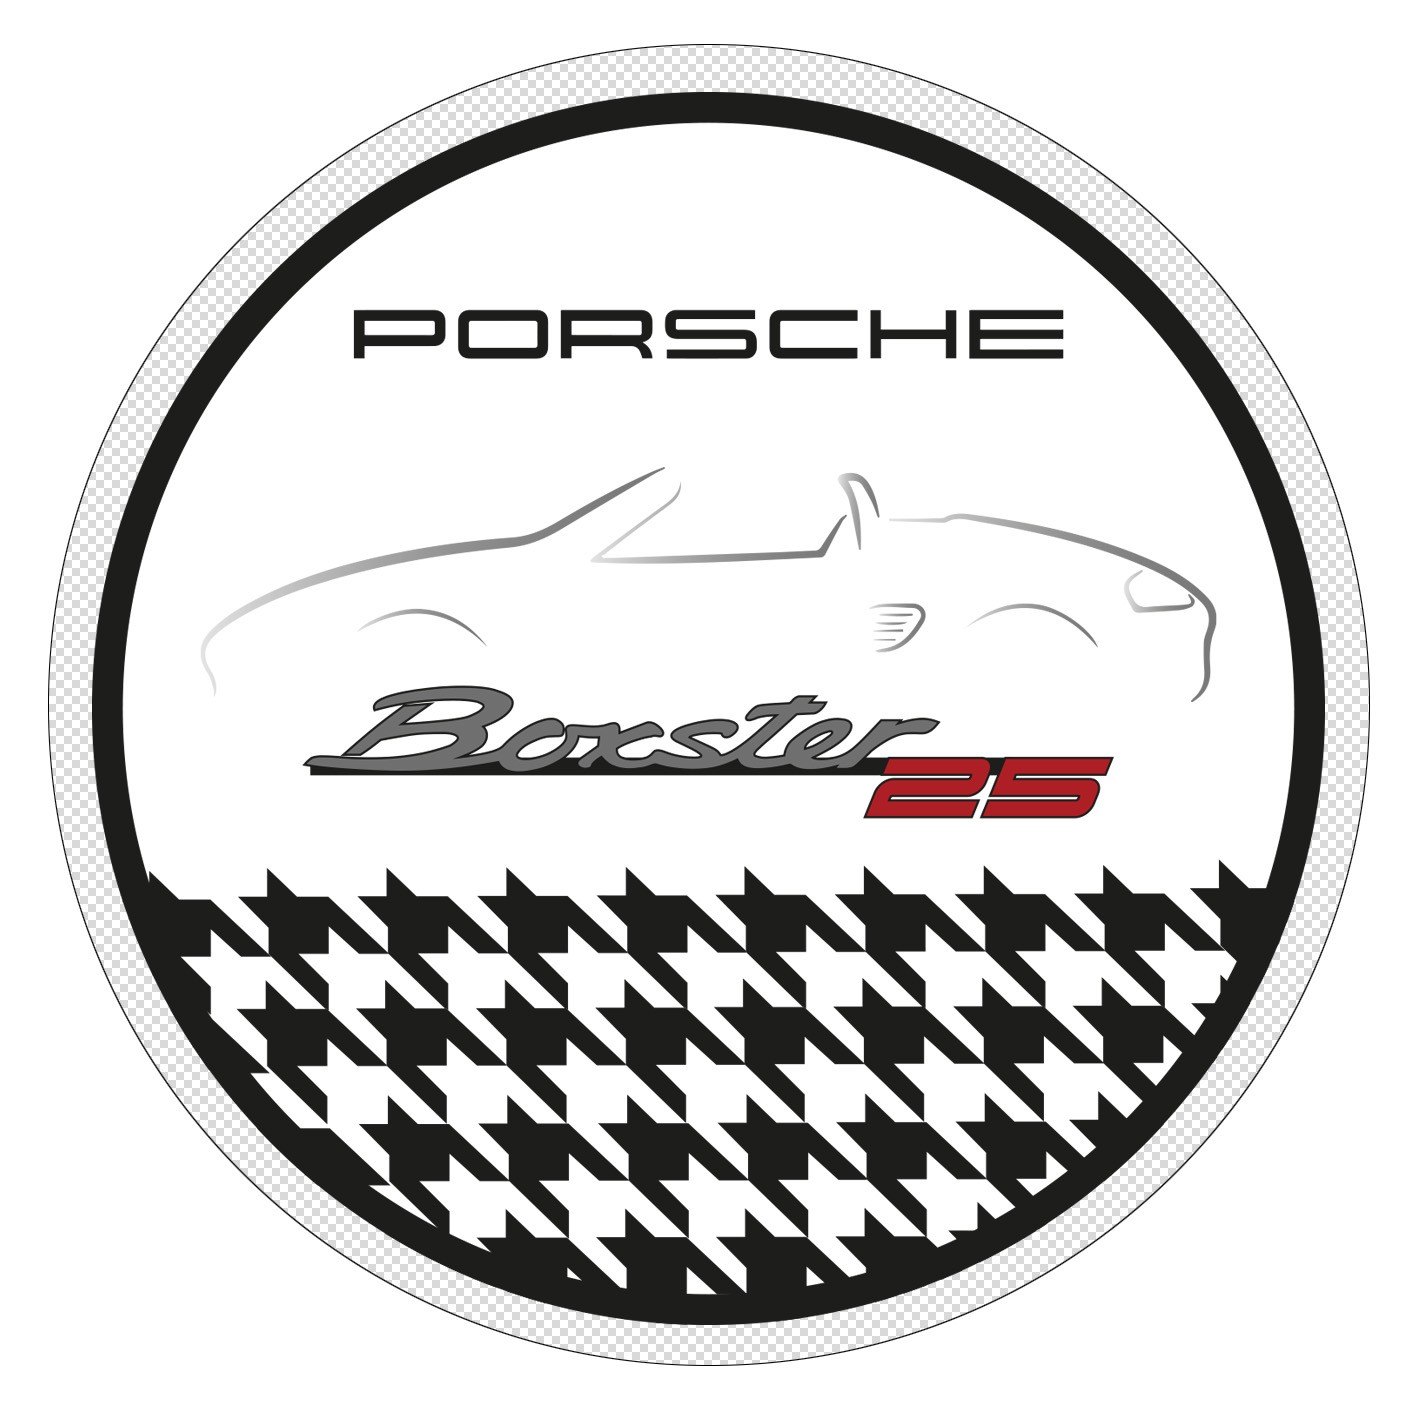 Porsche Boxster 25 Years Badge